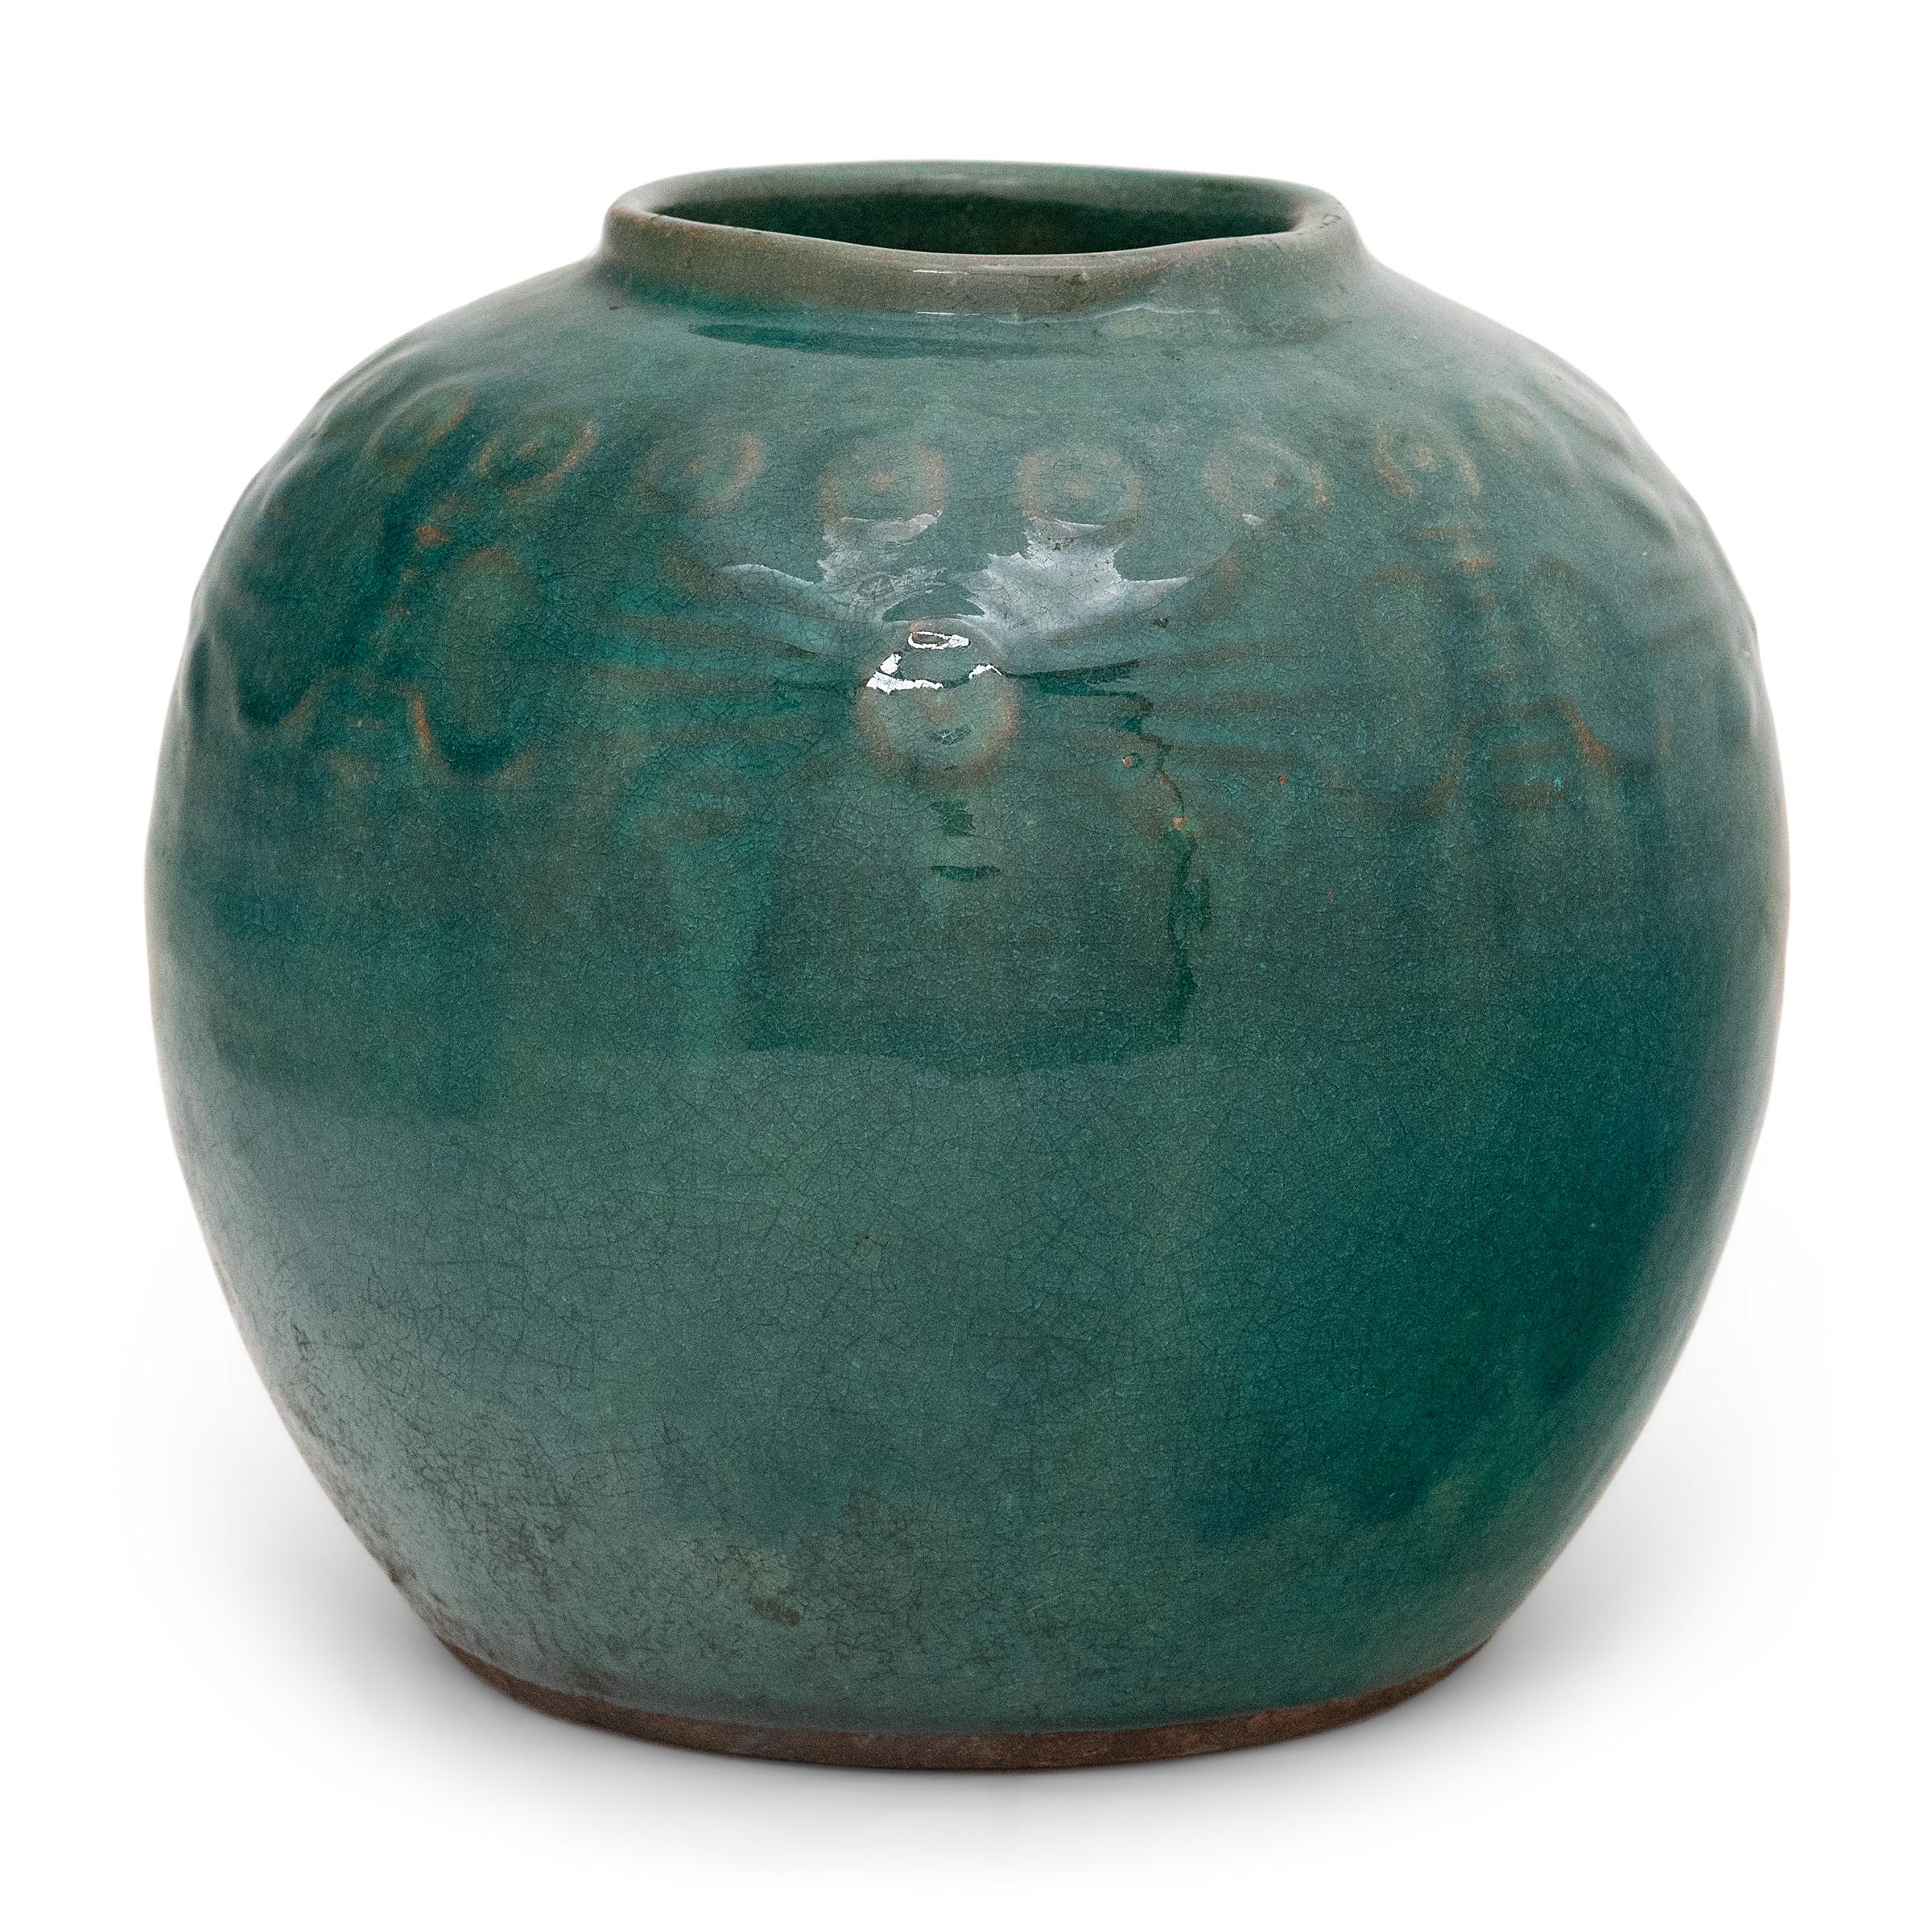 Chinese Export Chinese Jade Green Salt Jar, c. 1900